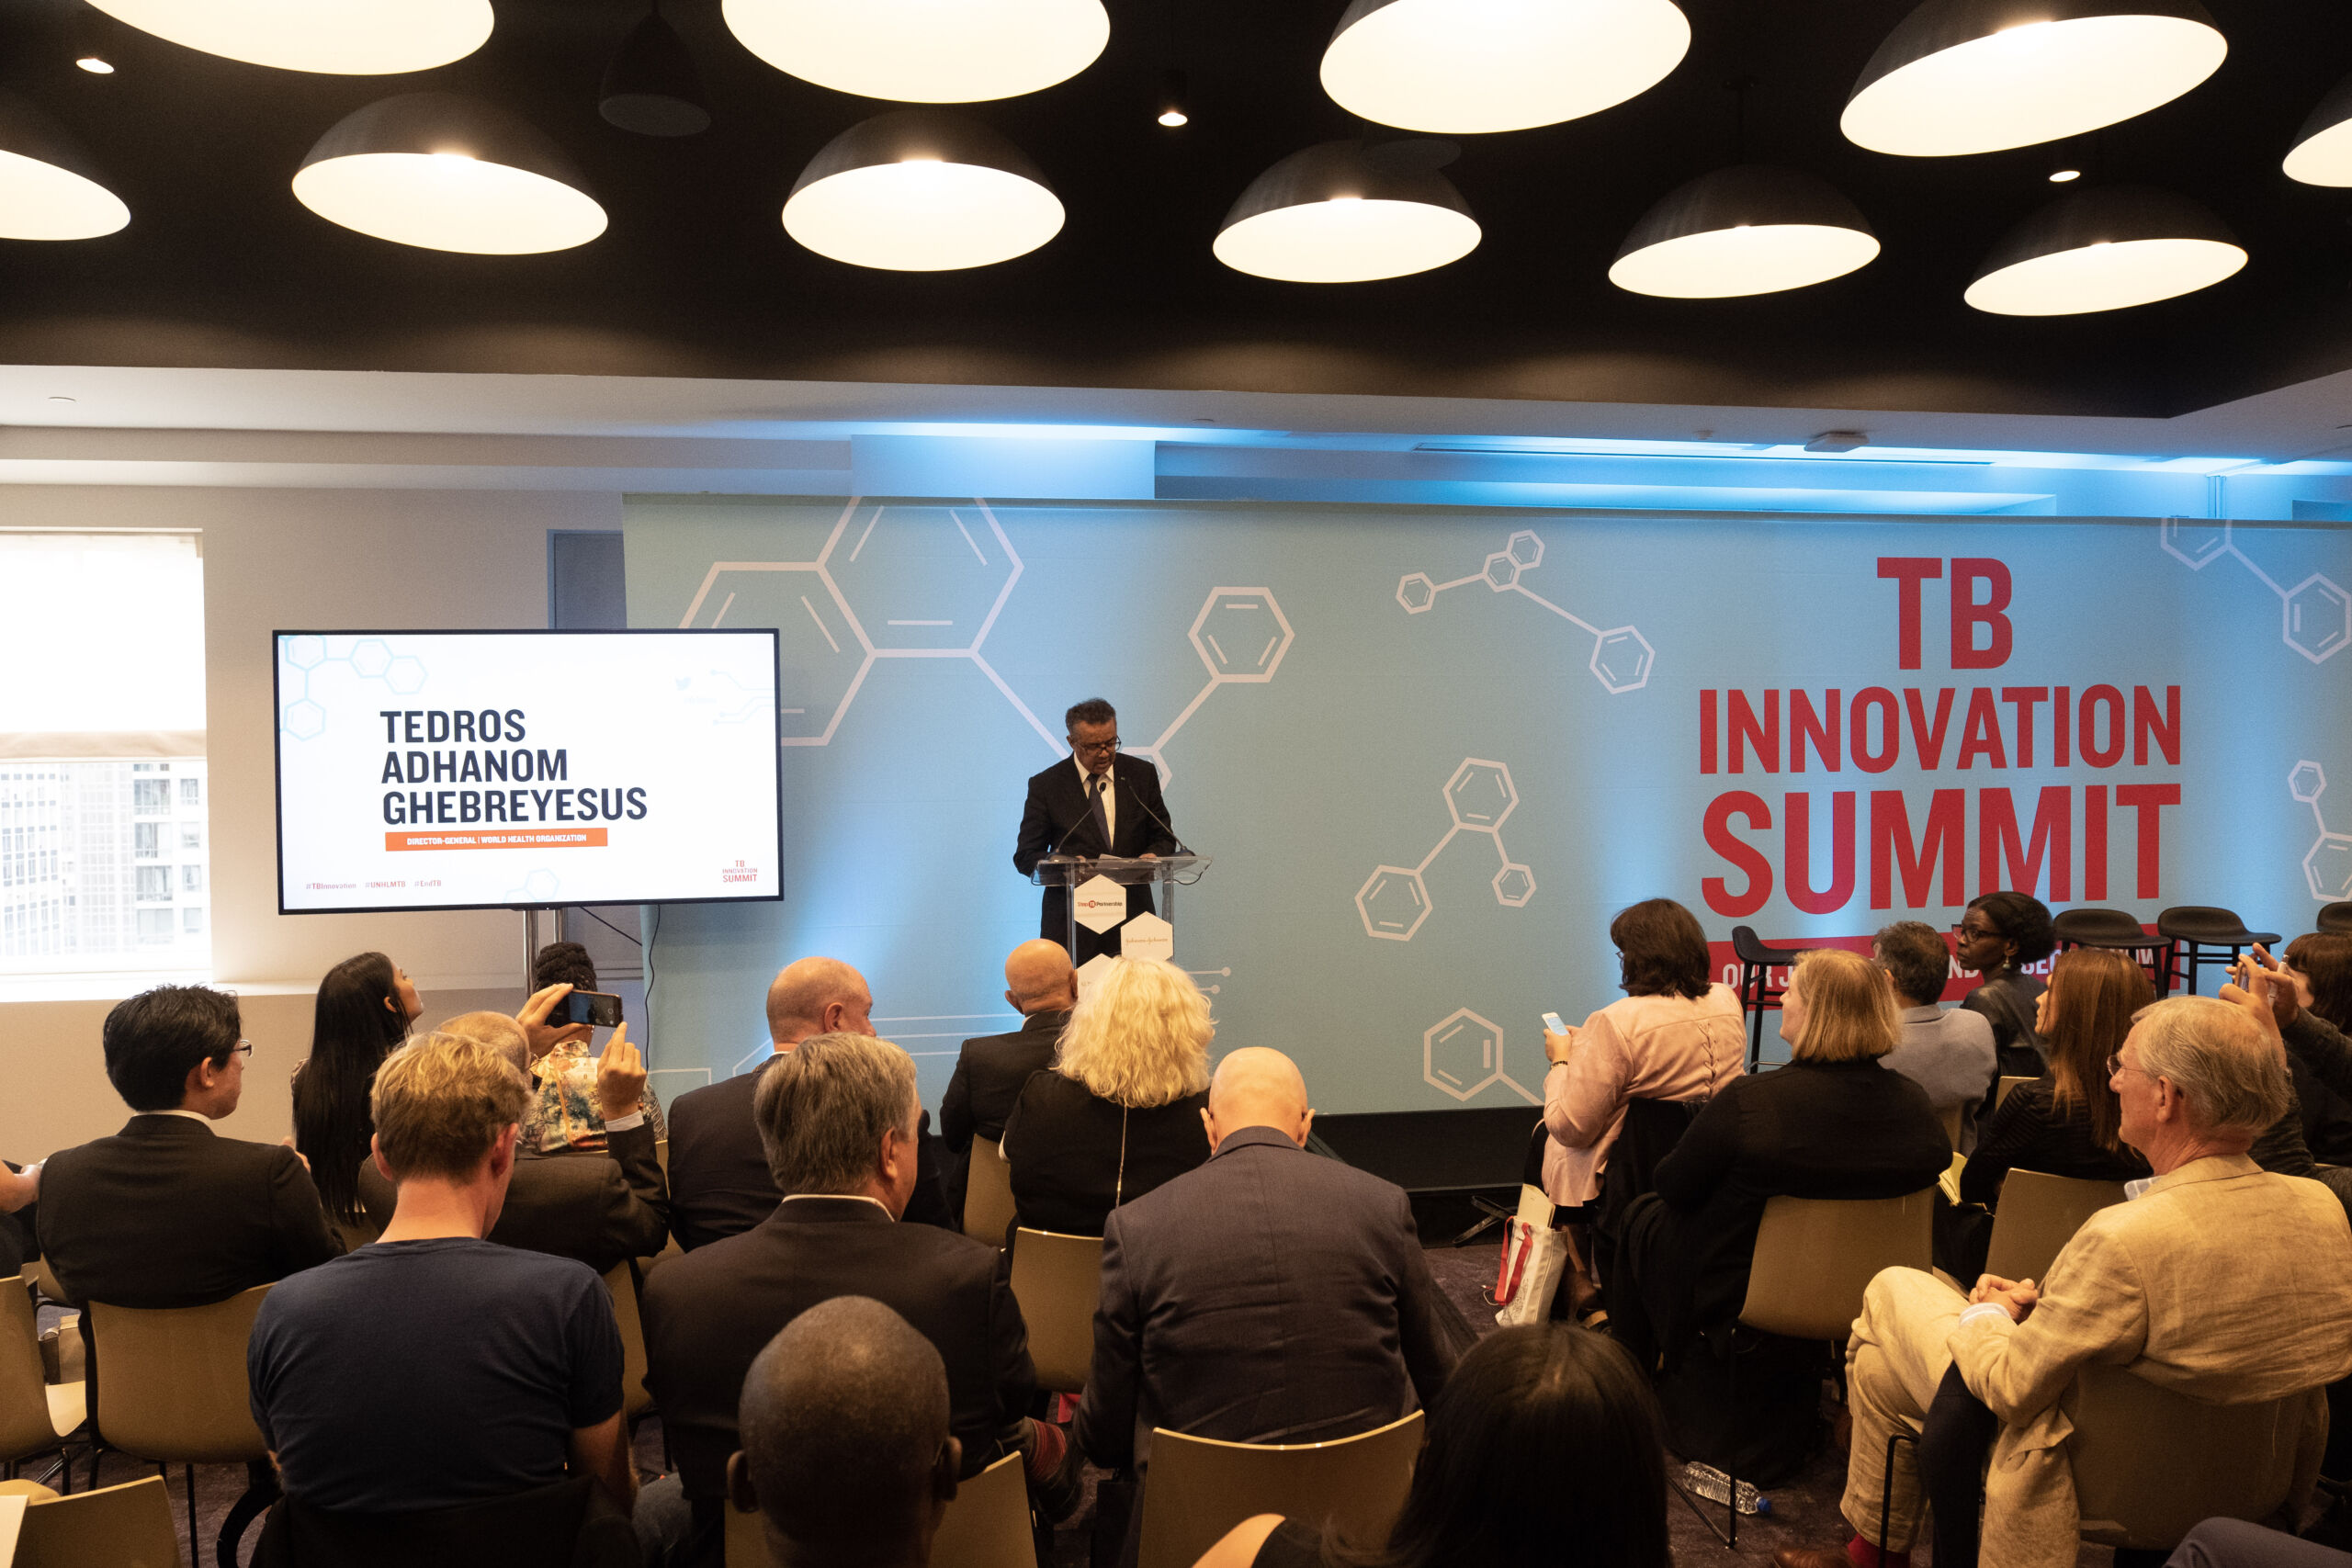 TB Innovation Summit